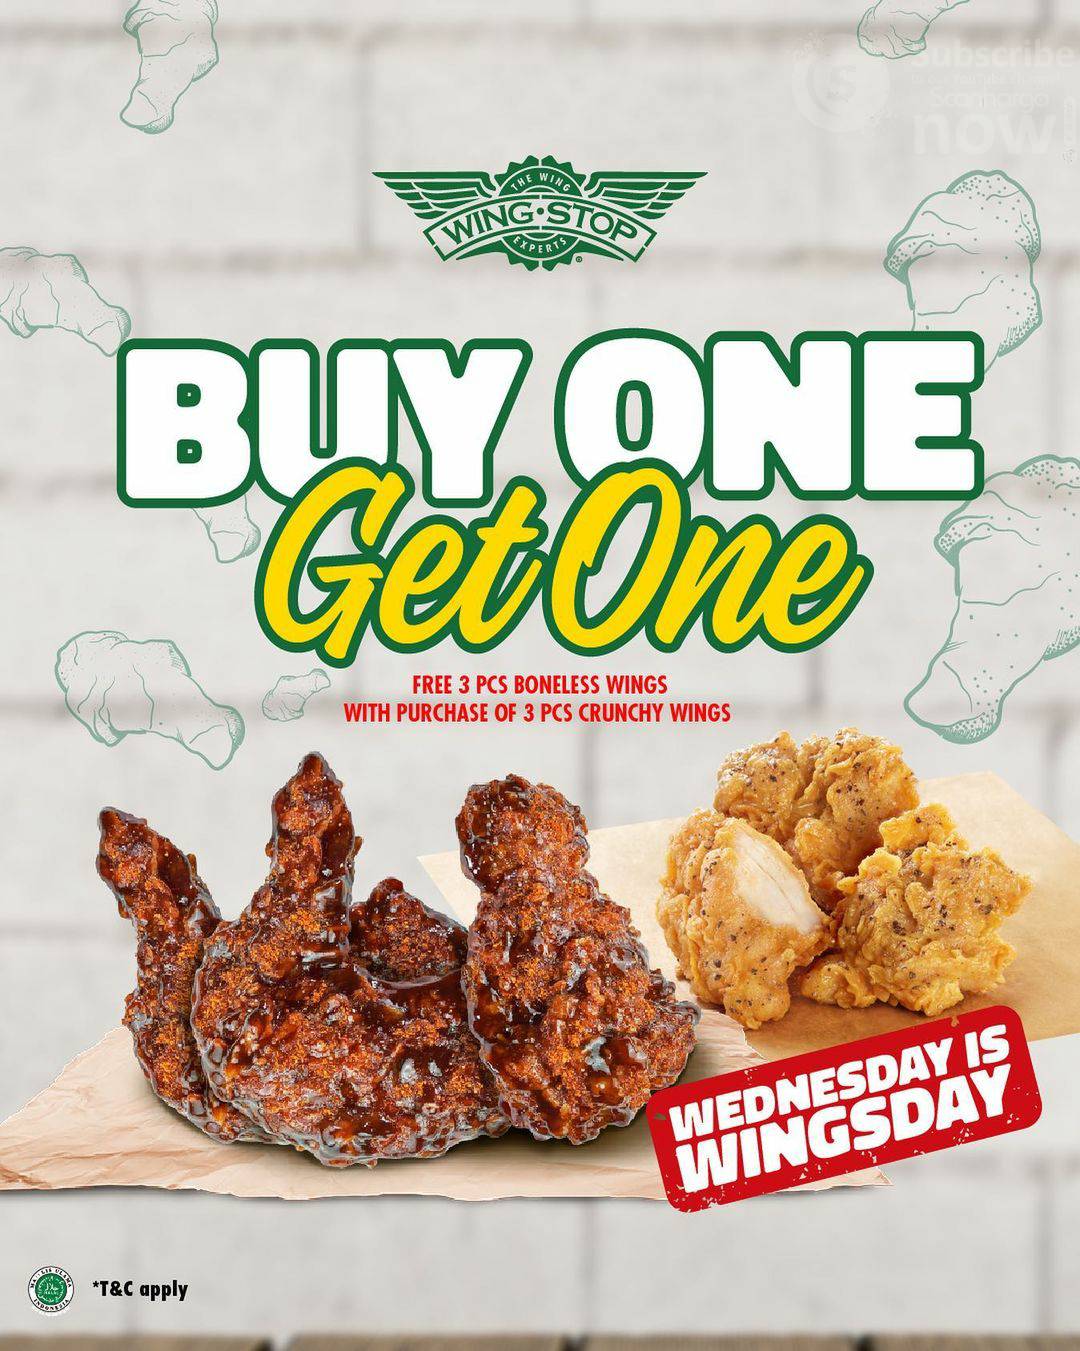 Promo Wingstop Wednesday is Wingsday Buy 1 Get 1*